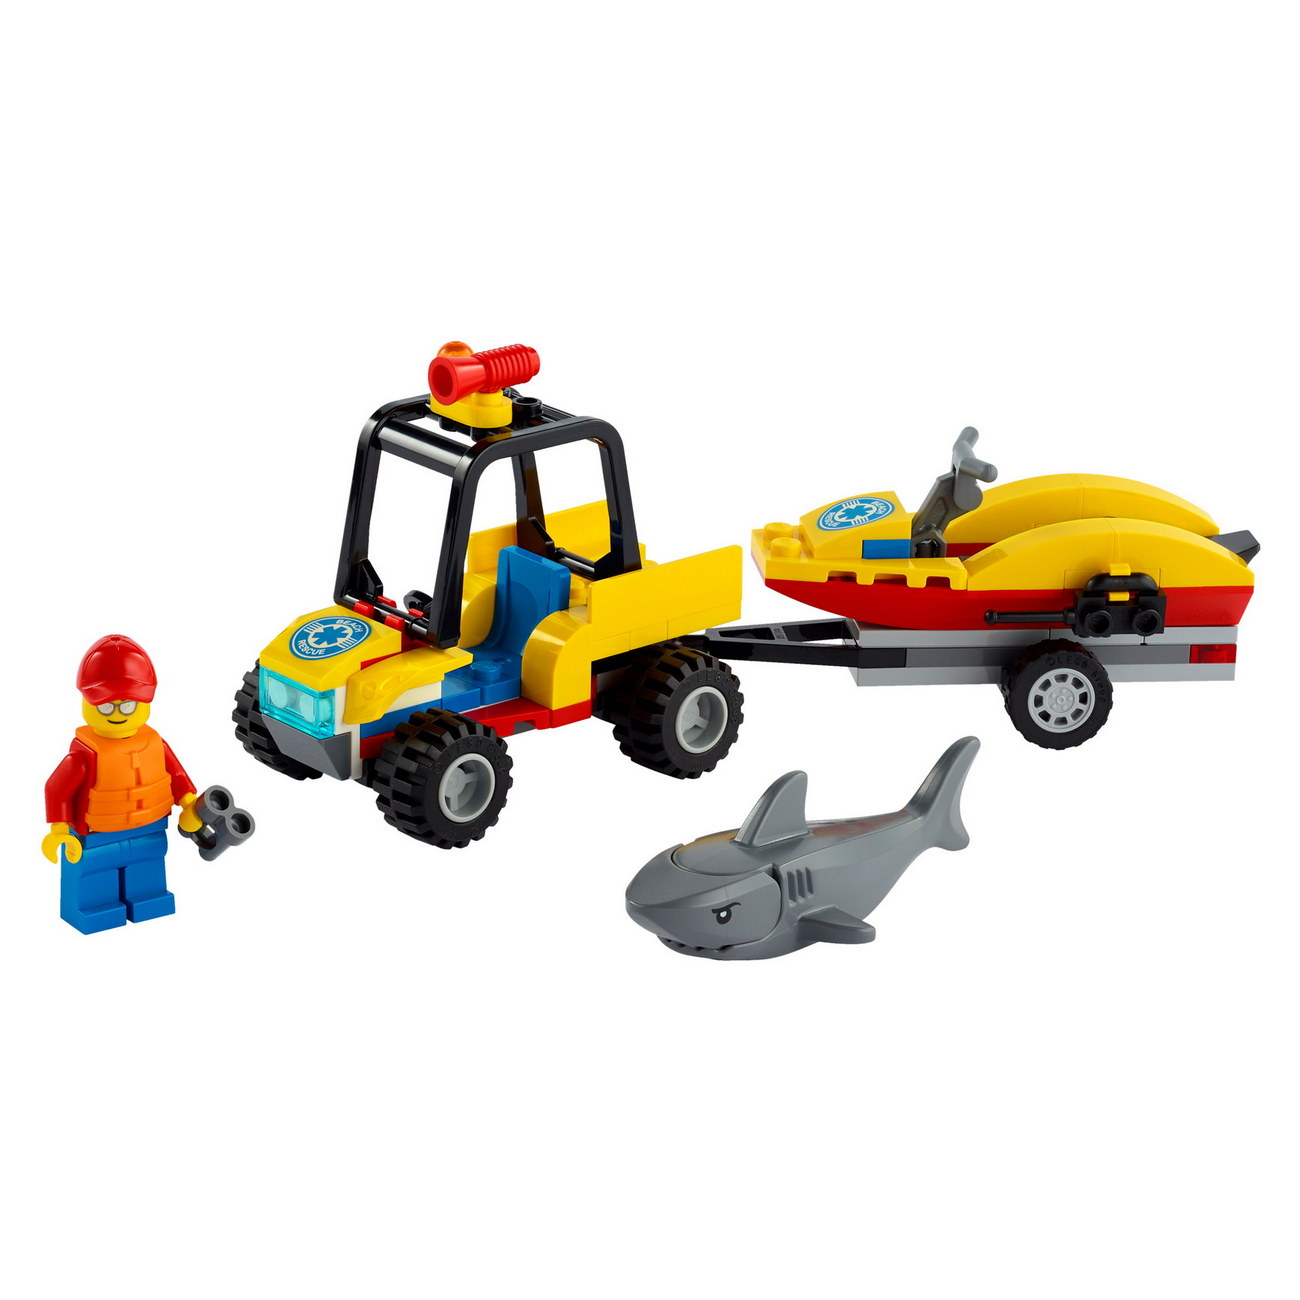 LEGO City 60286 - Strand-Rettungsquad